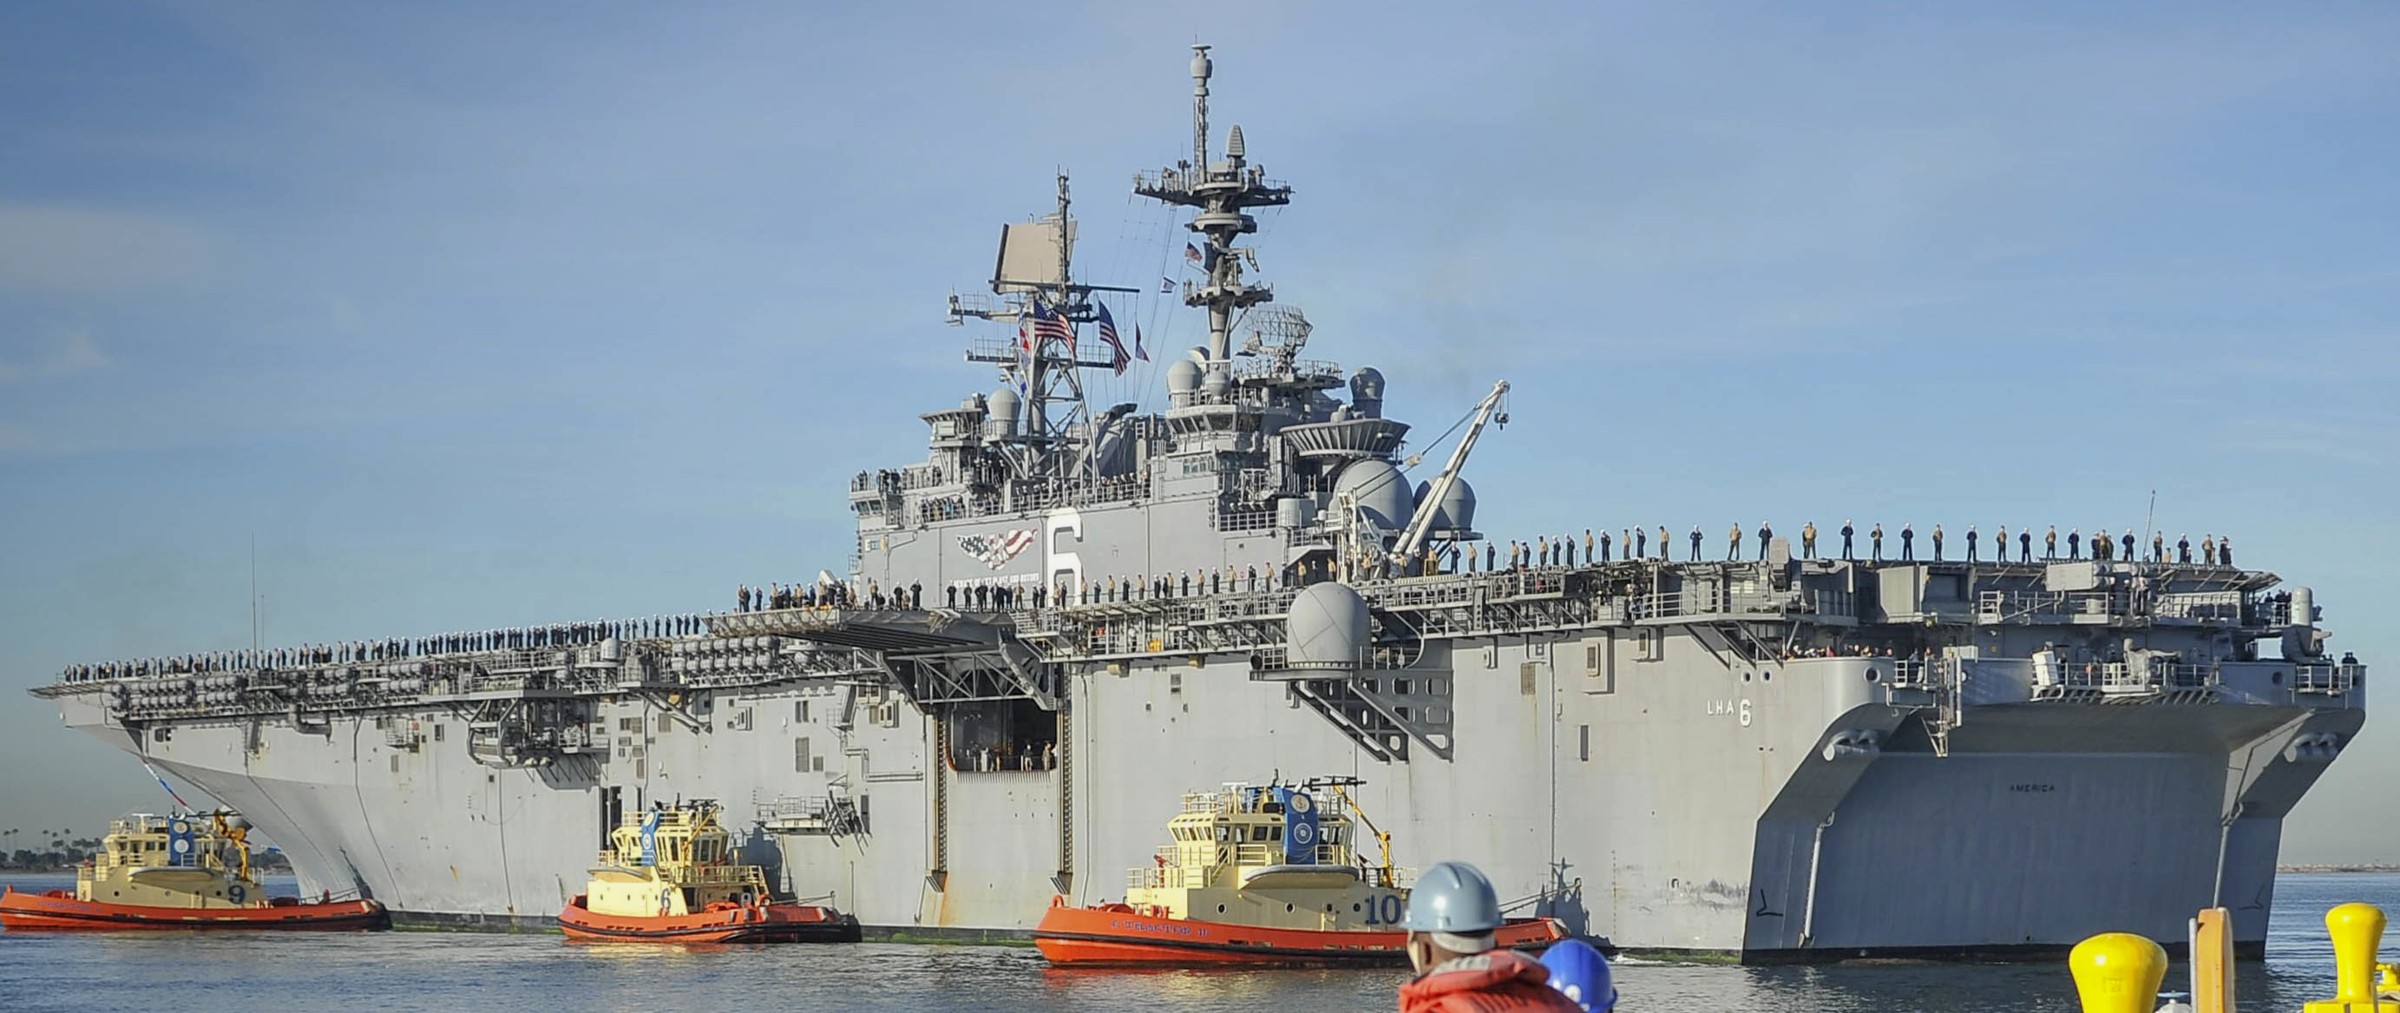 lha-6 uss america amphibious assault ship us navy 96 homeport san diego california